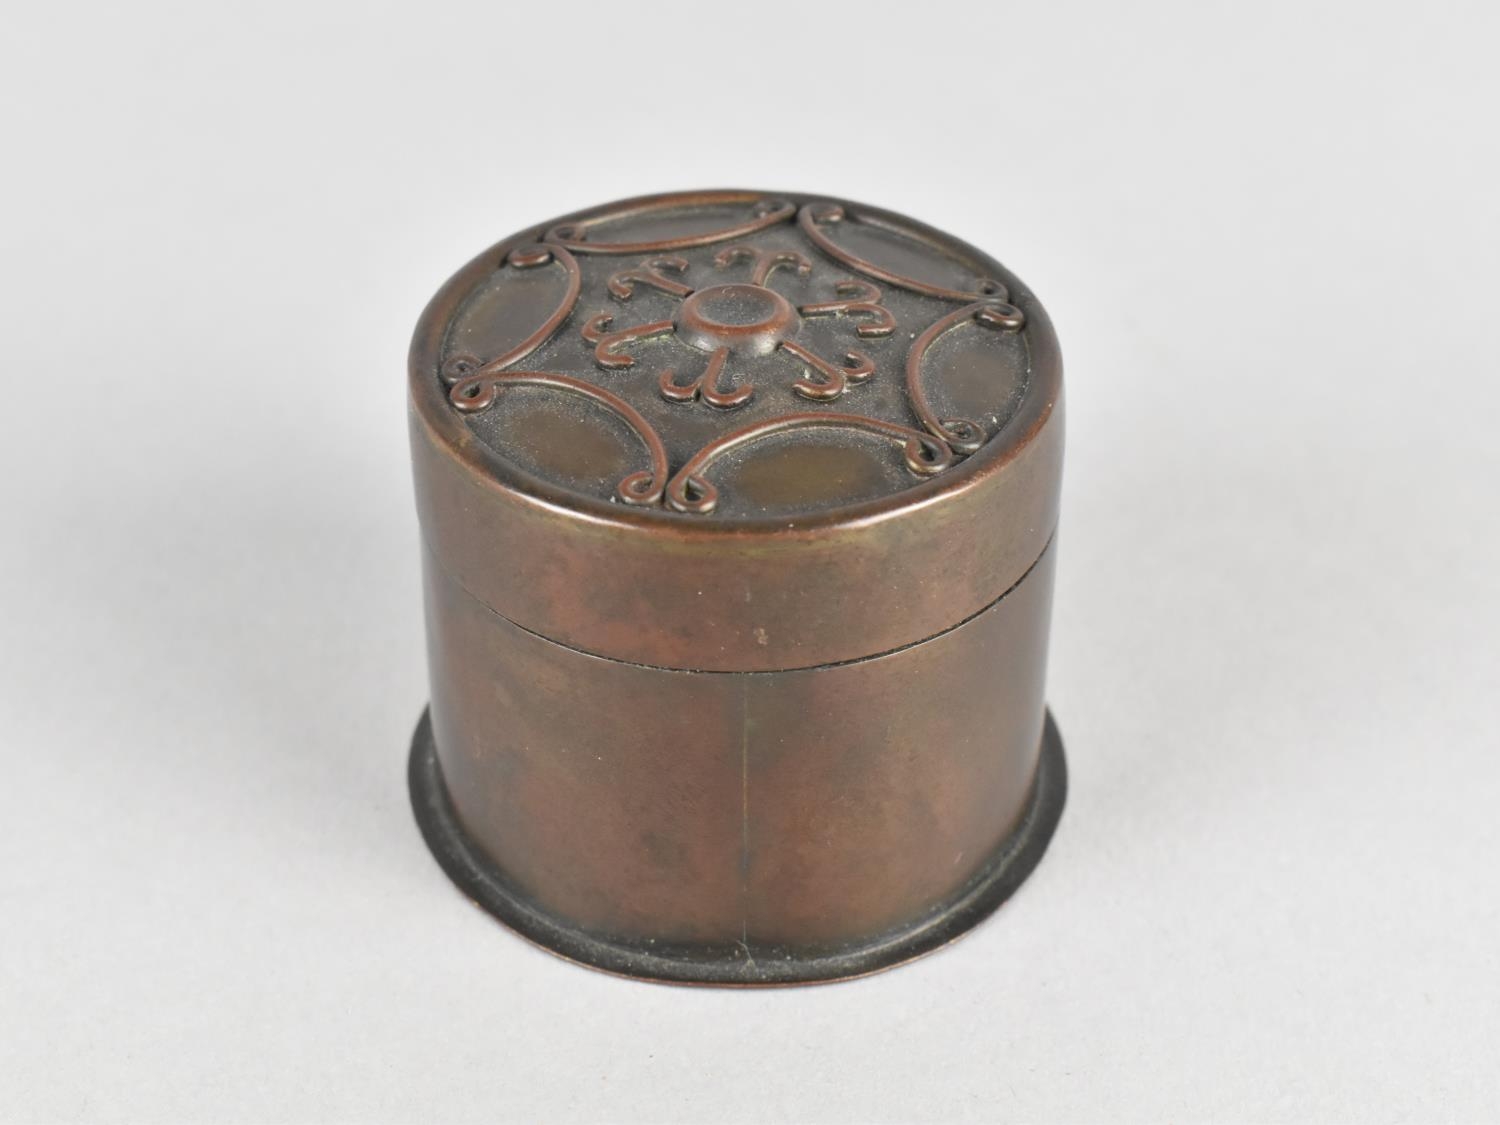 A Small Bronze Circular Trinket Box, the Lid with Relief Fleur De Lys Motif, 4cms High